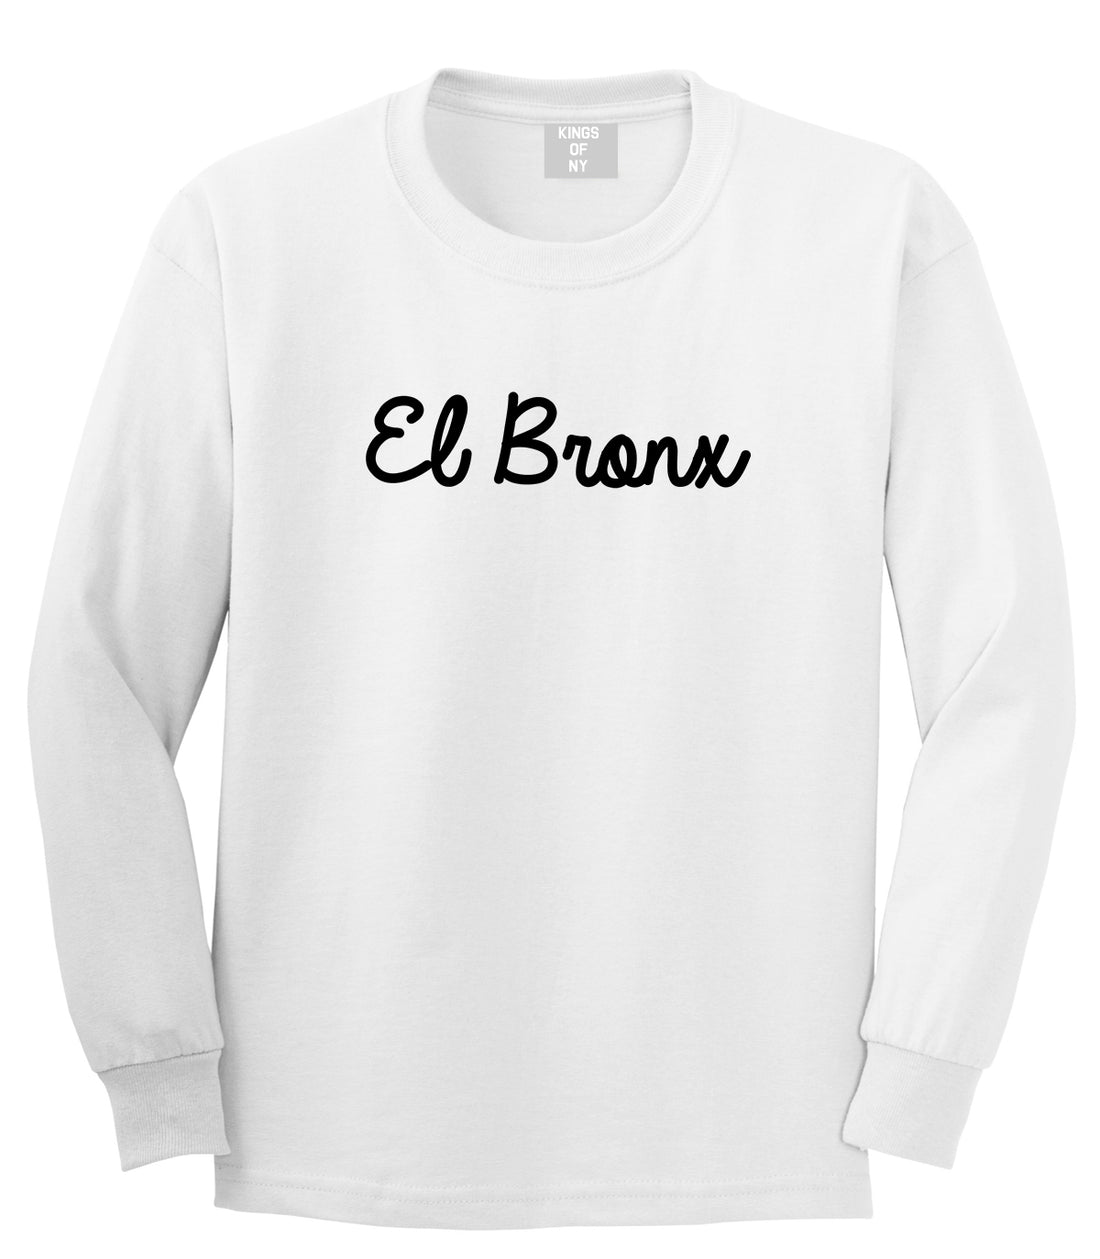 El Bronx Spanish Script Mens Long Sleeve T-Shirt White by Kings Of NY